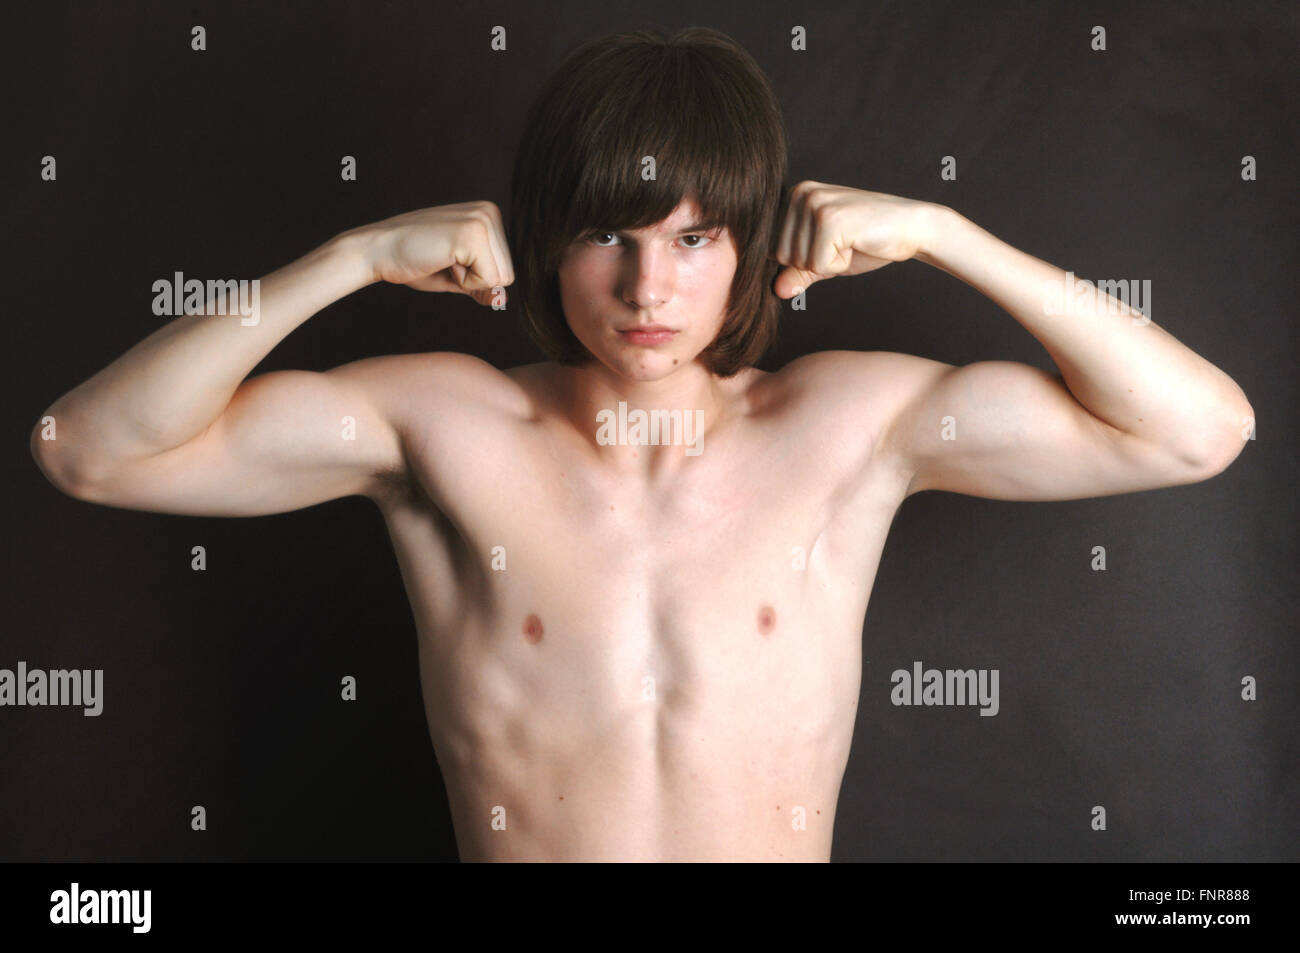 Bare chested adolescente flexiona sus músculos. Foto de stock